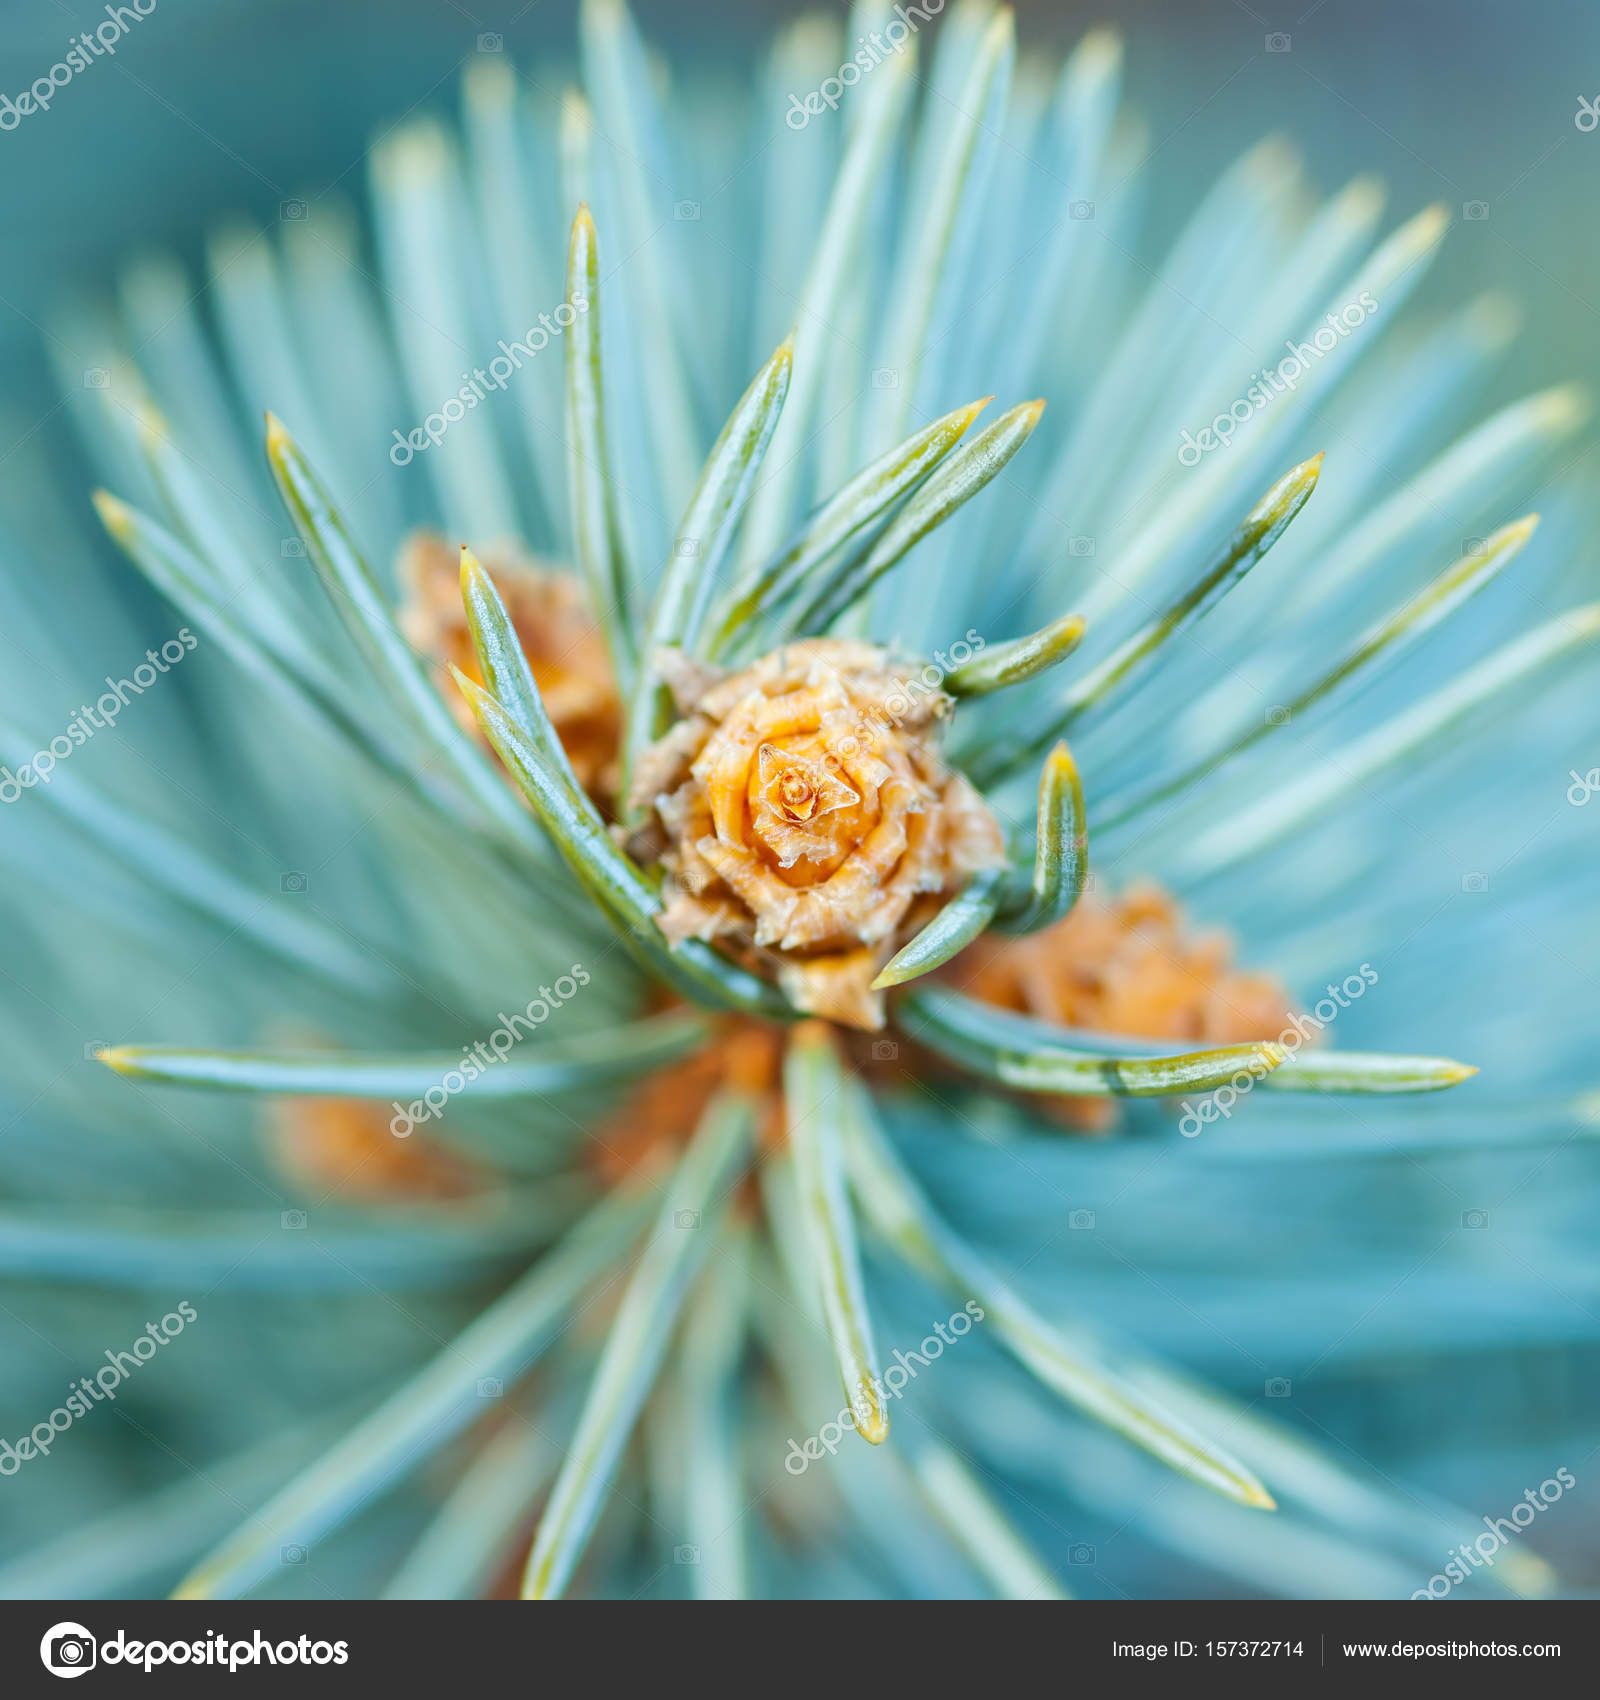 Blue Fir Sprout Macro — Stock Photo © nechaev-kon.yandex.ru #157372714